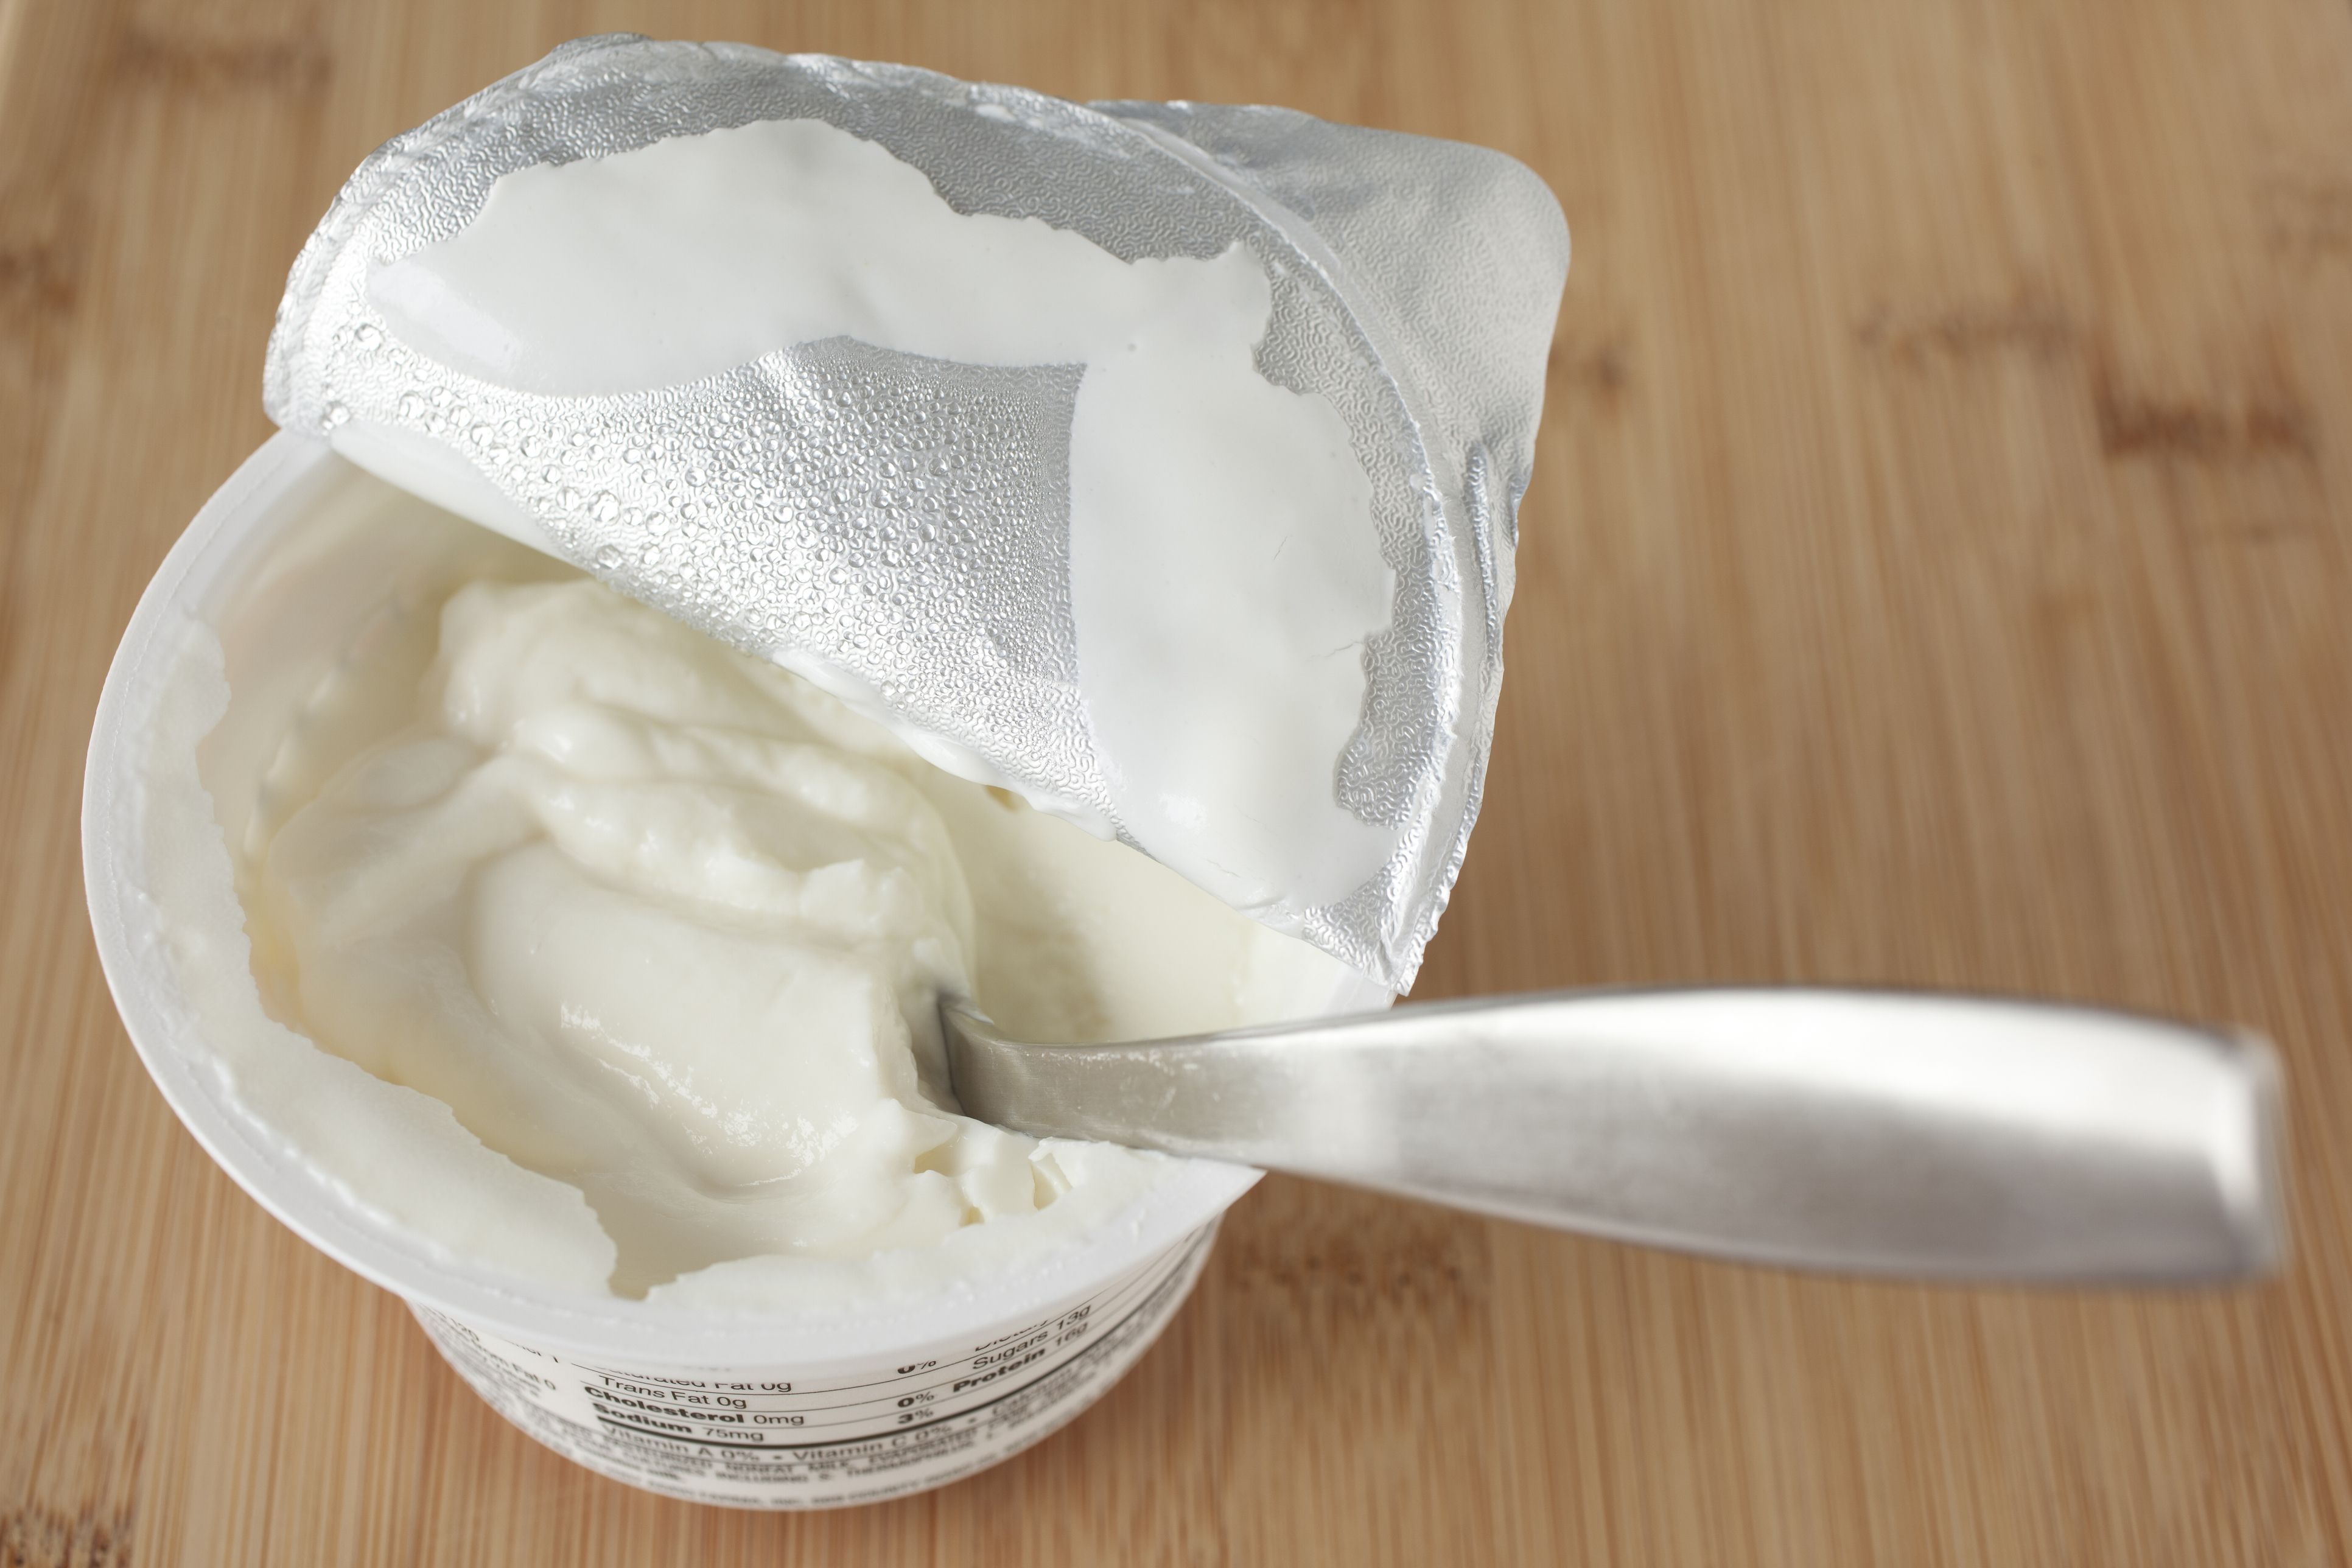 Greek Yogurt with Spoon